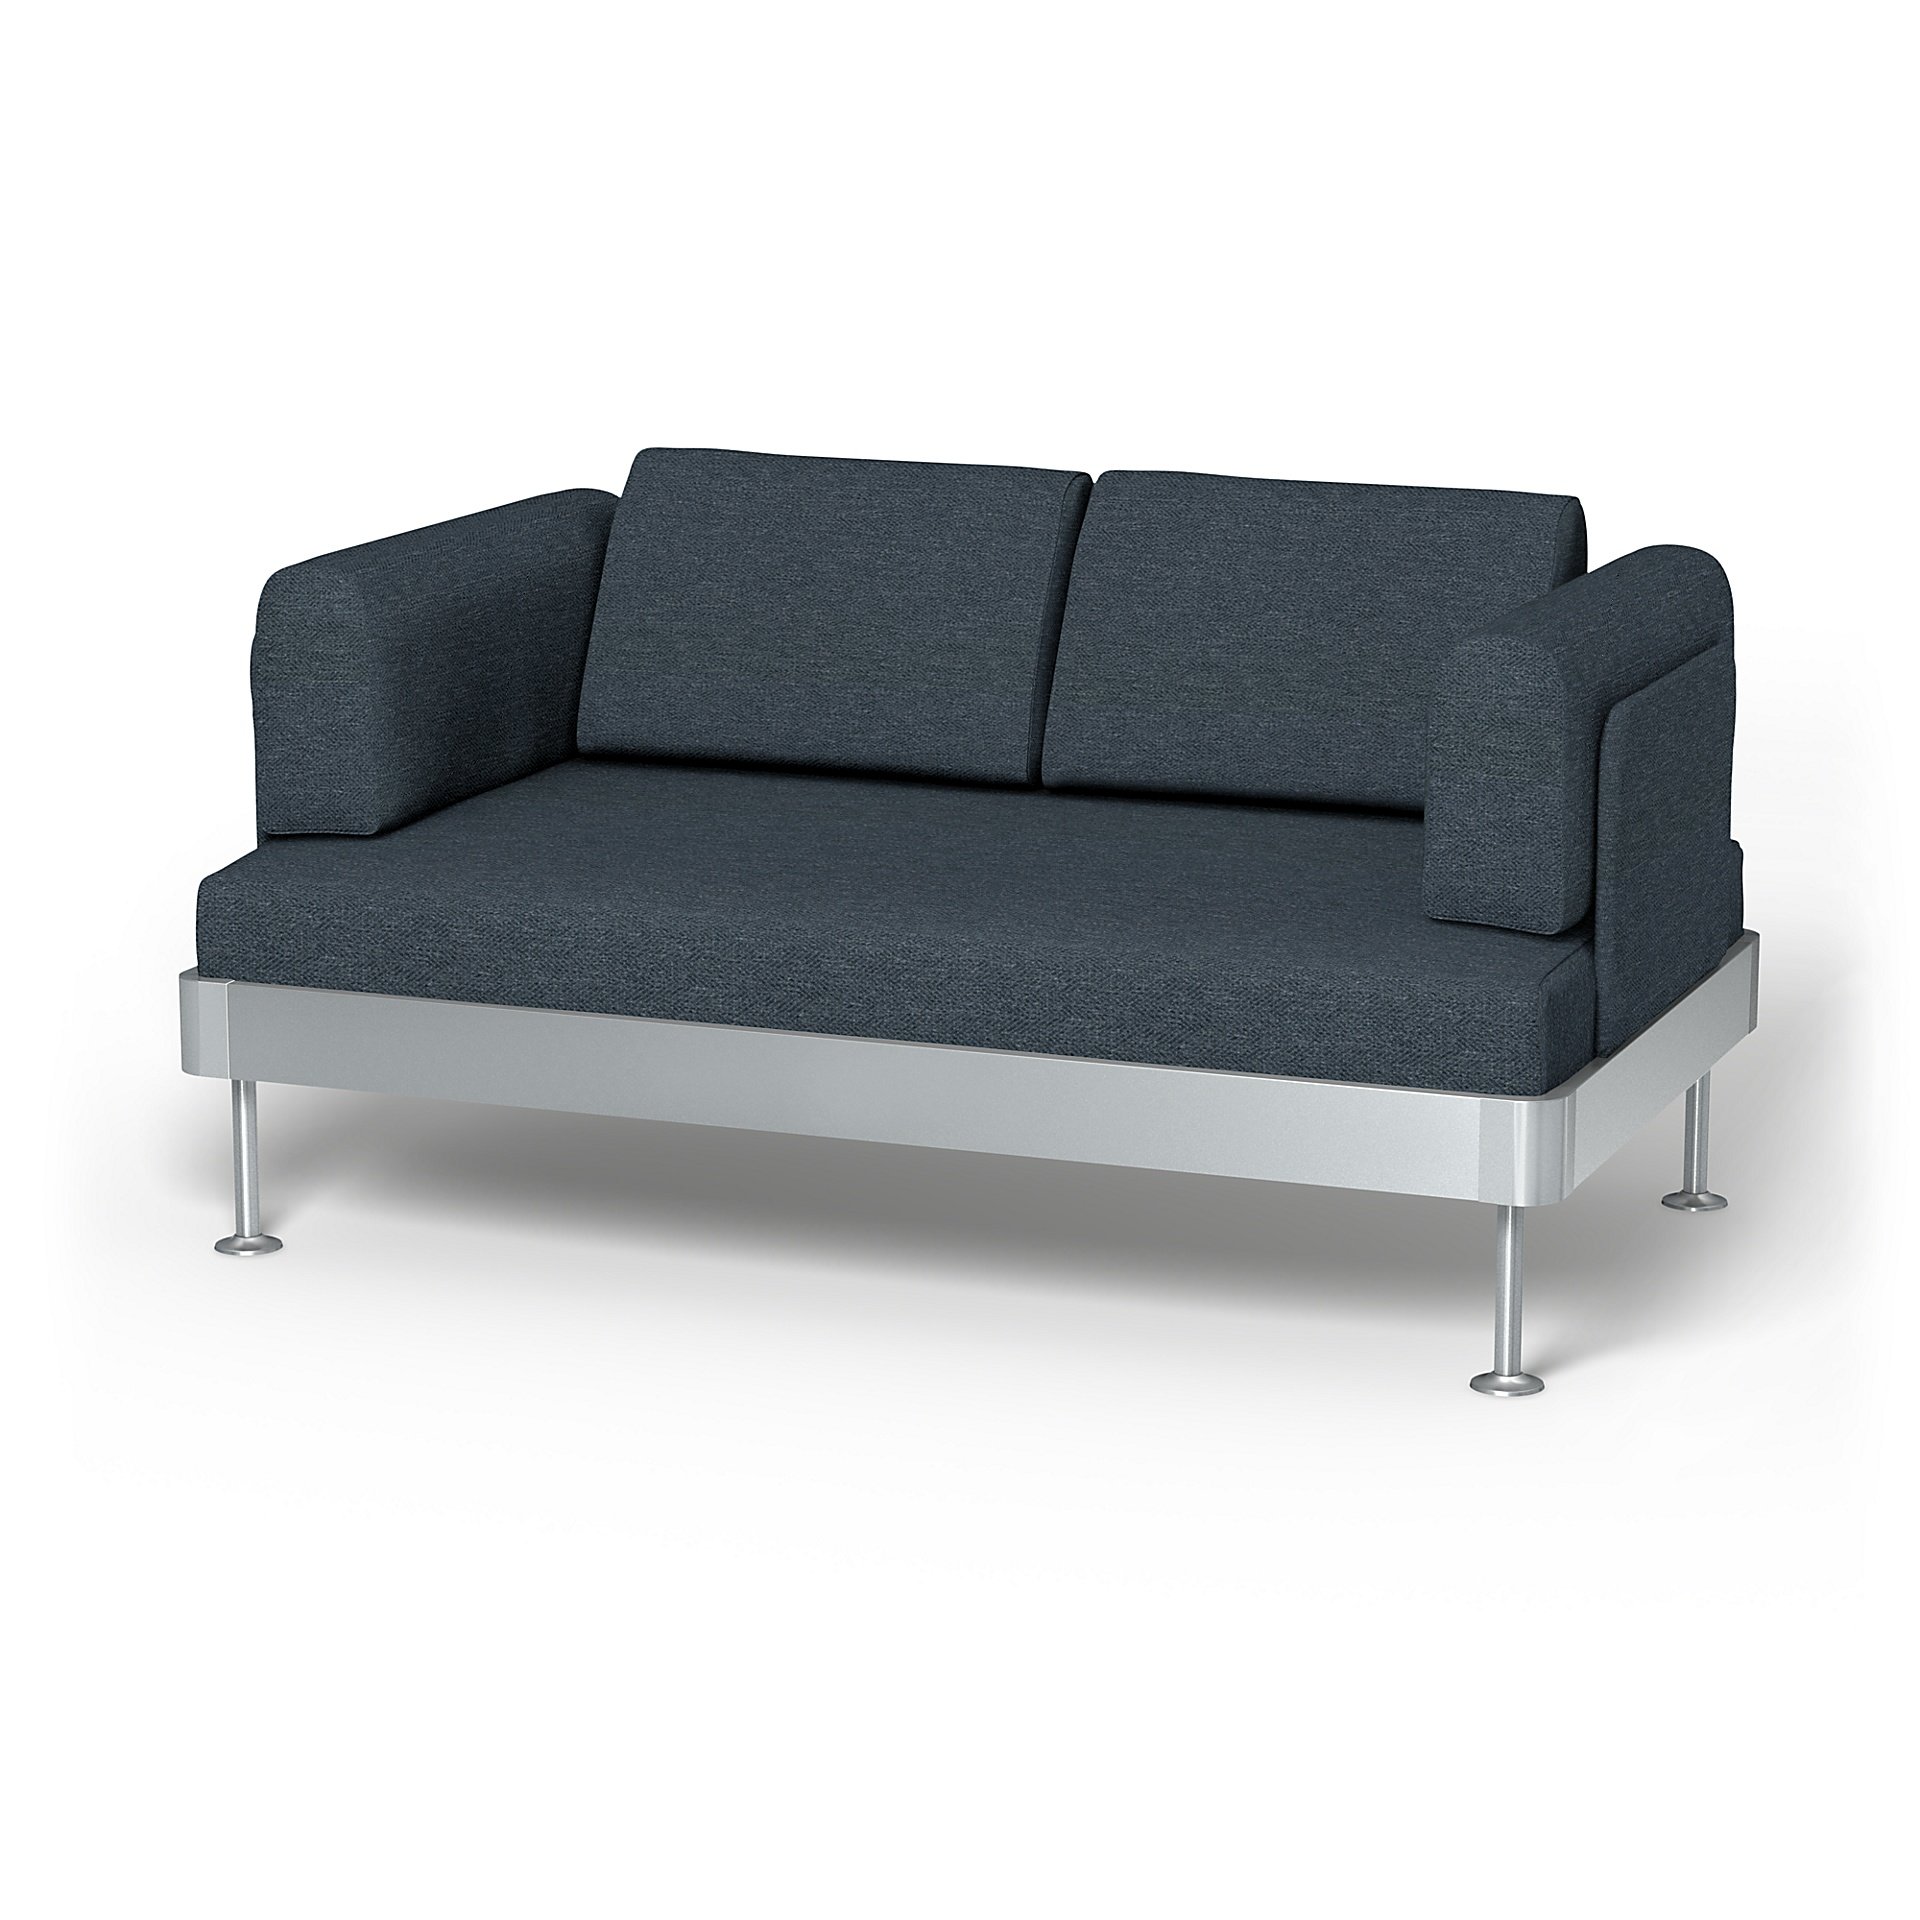 IKEA - Delaktig 2 Seater Sofa Cover, Denim, Boucle & Texture - Bemz